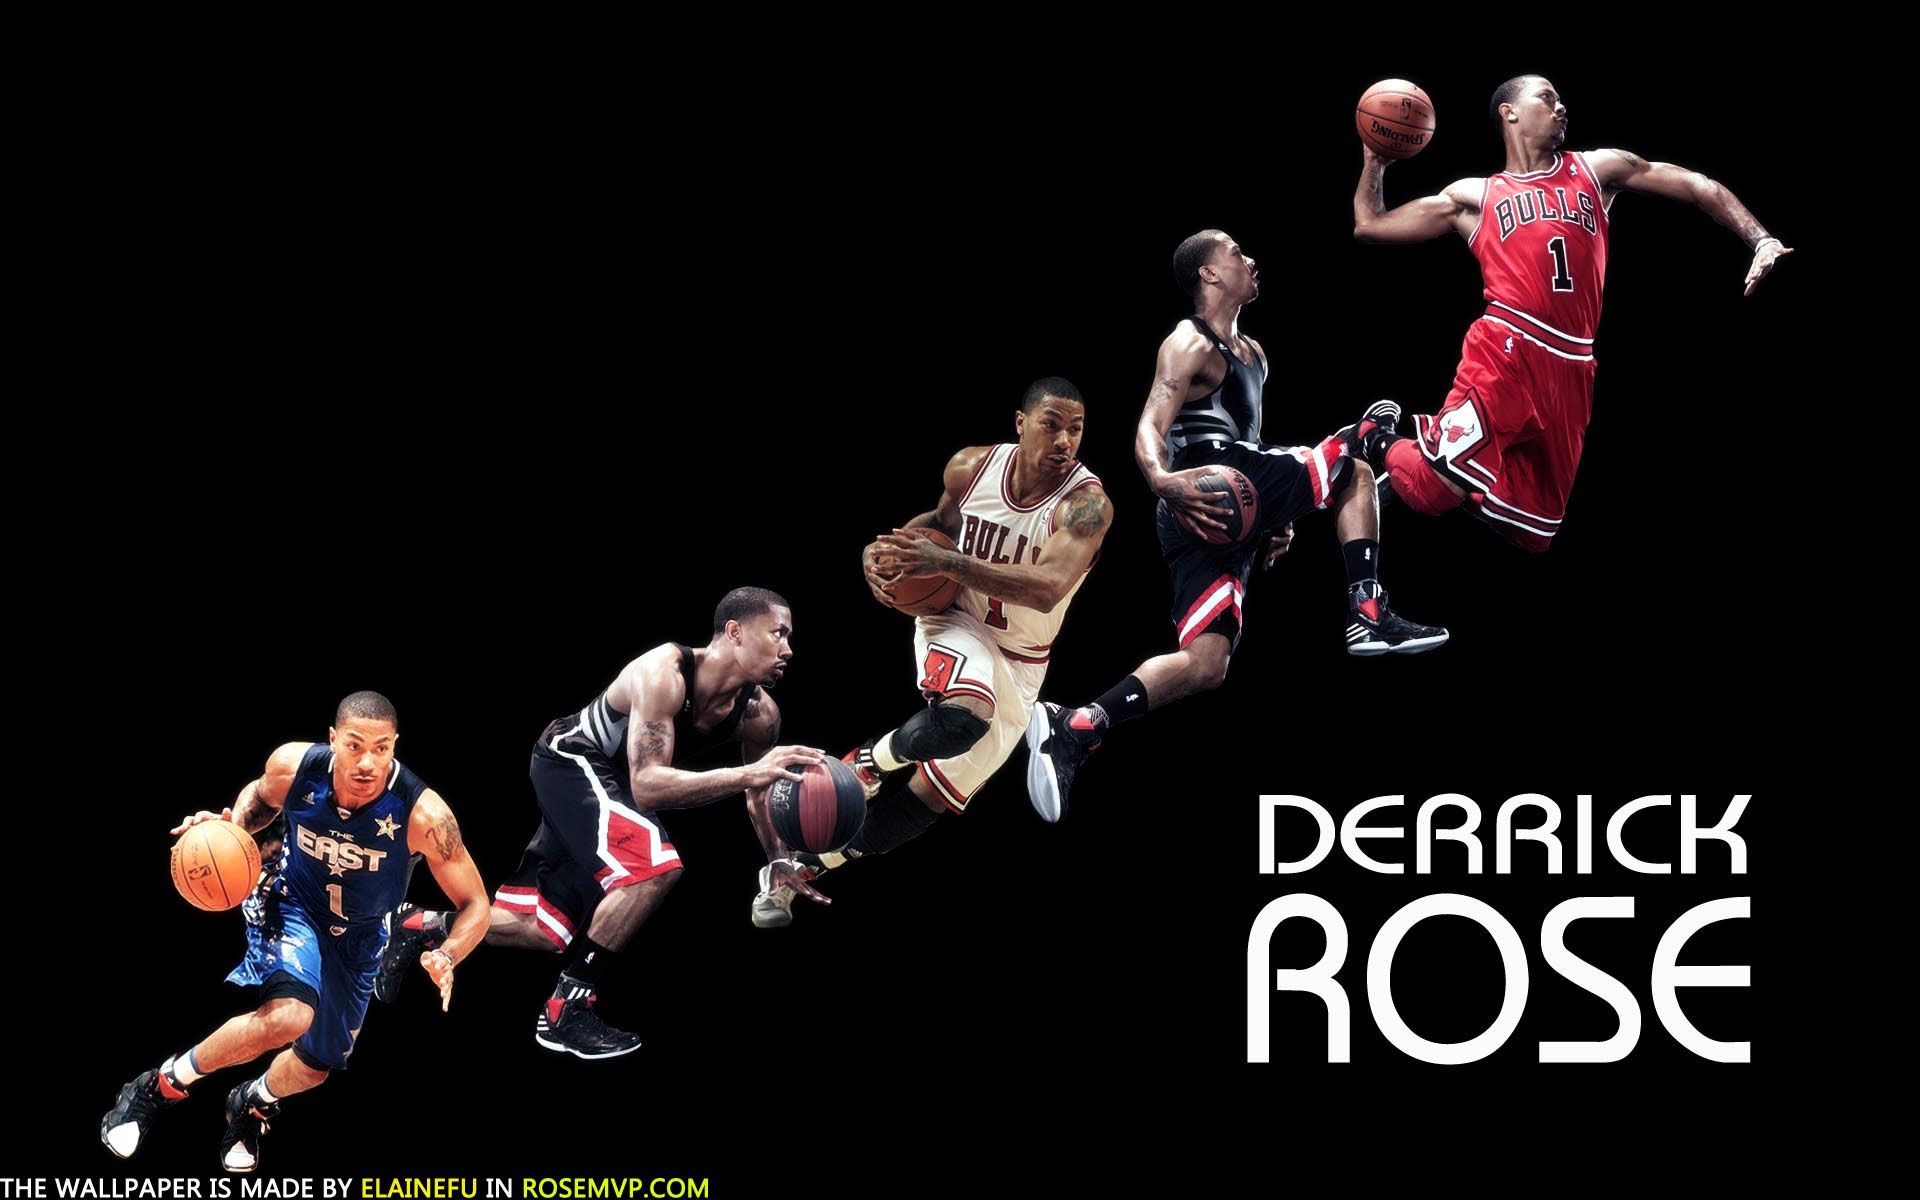 Derrick Rose Logo Wallpaper Image